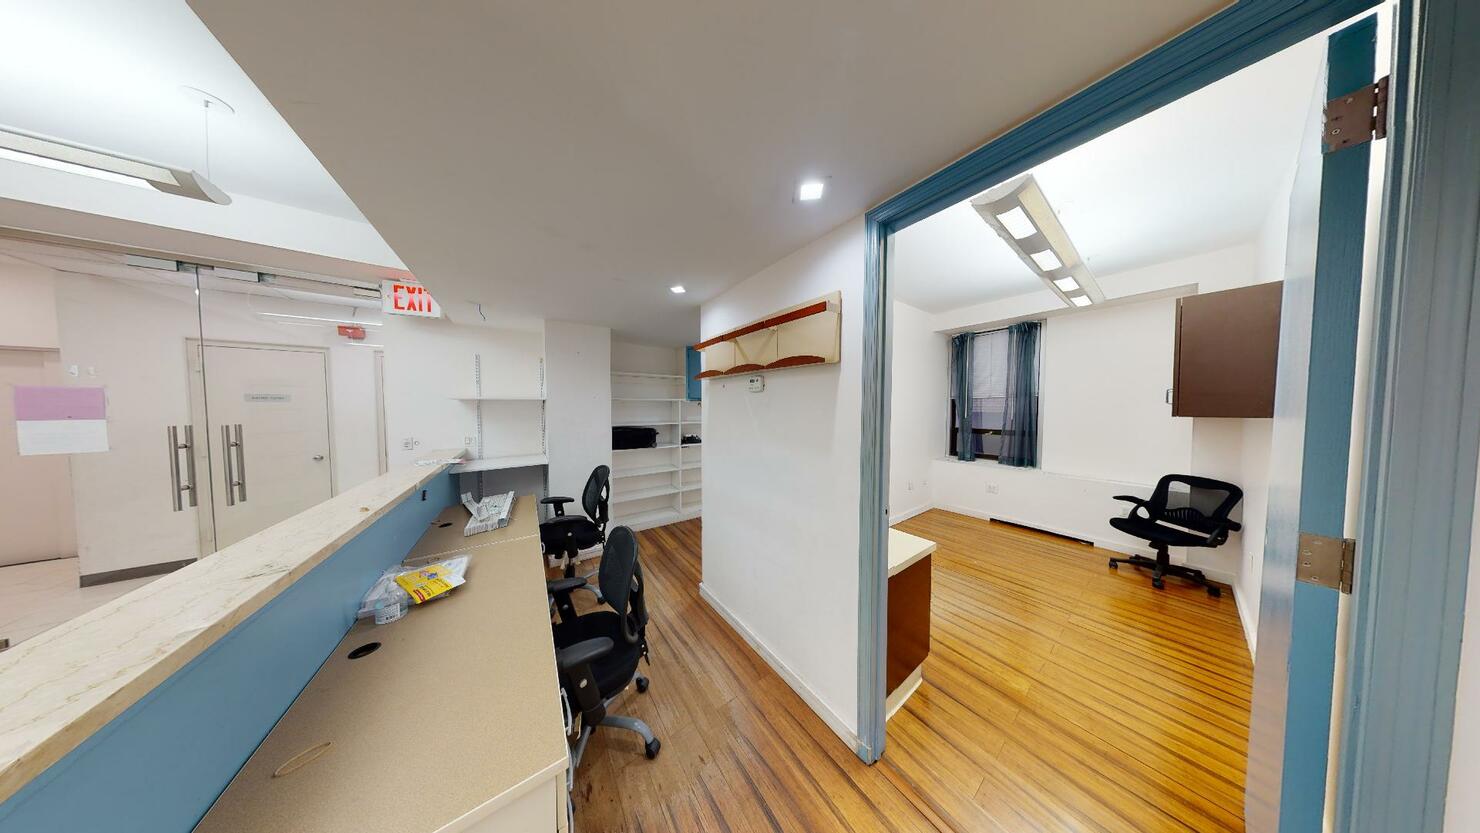 369 Lexington Avenue Office Space - Reception Desk